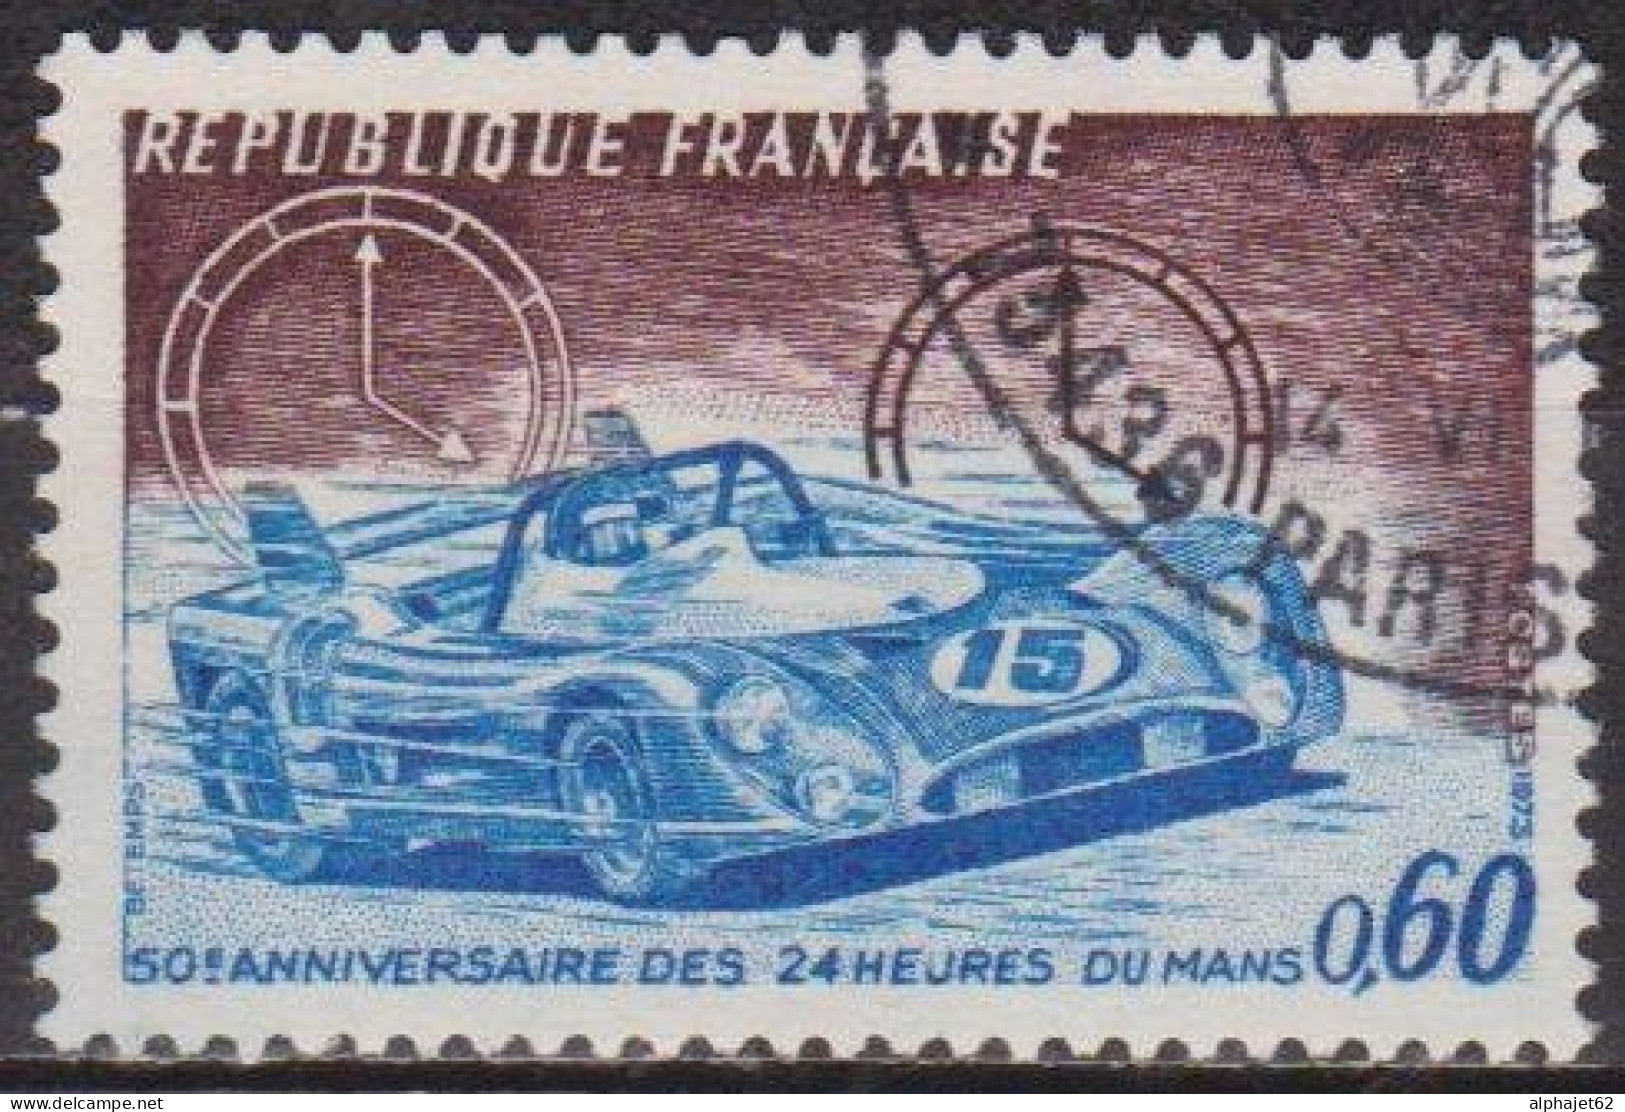 Sport Automobile - FRANCE - 24 H Du Mans Auto - N° 1761 - 1973 - Used Stamps